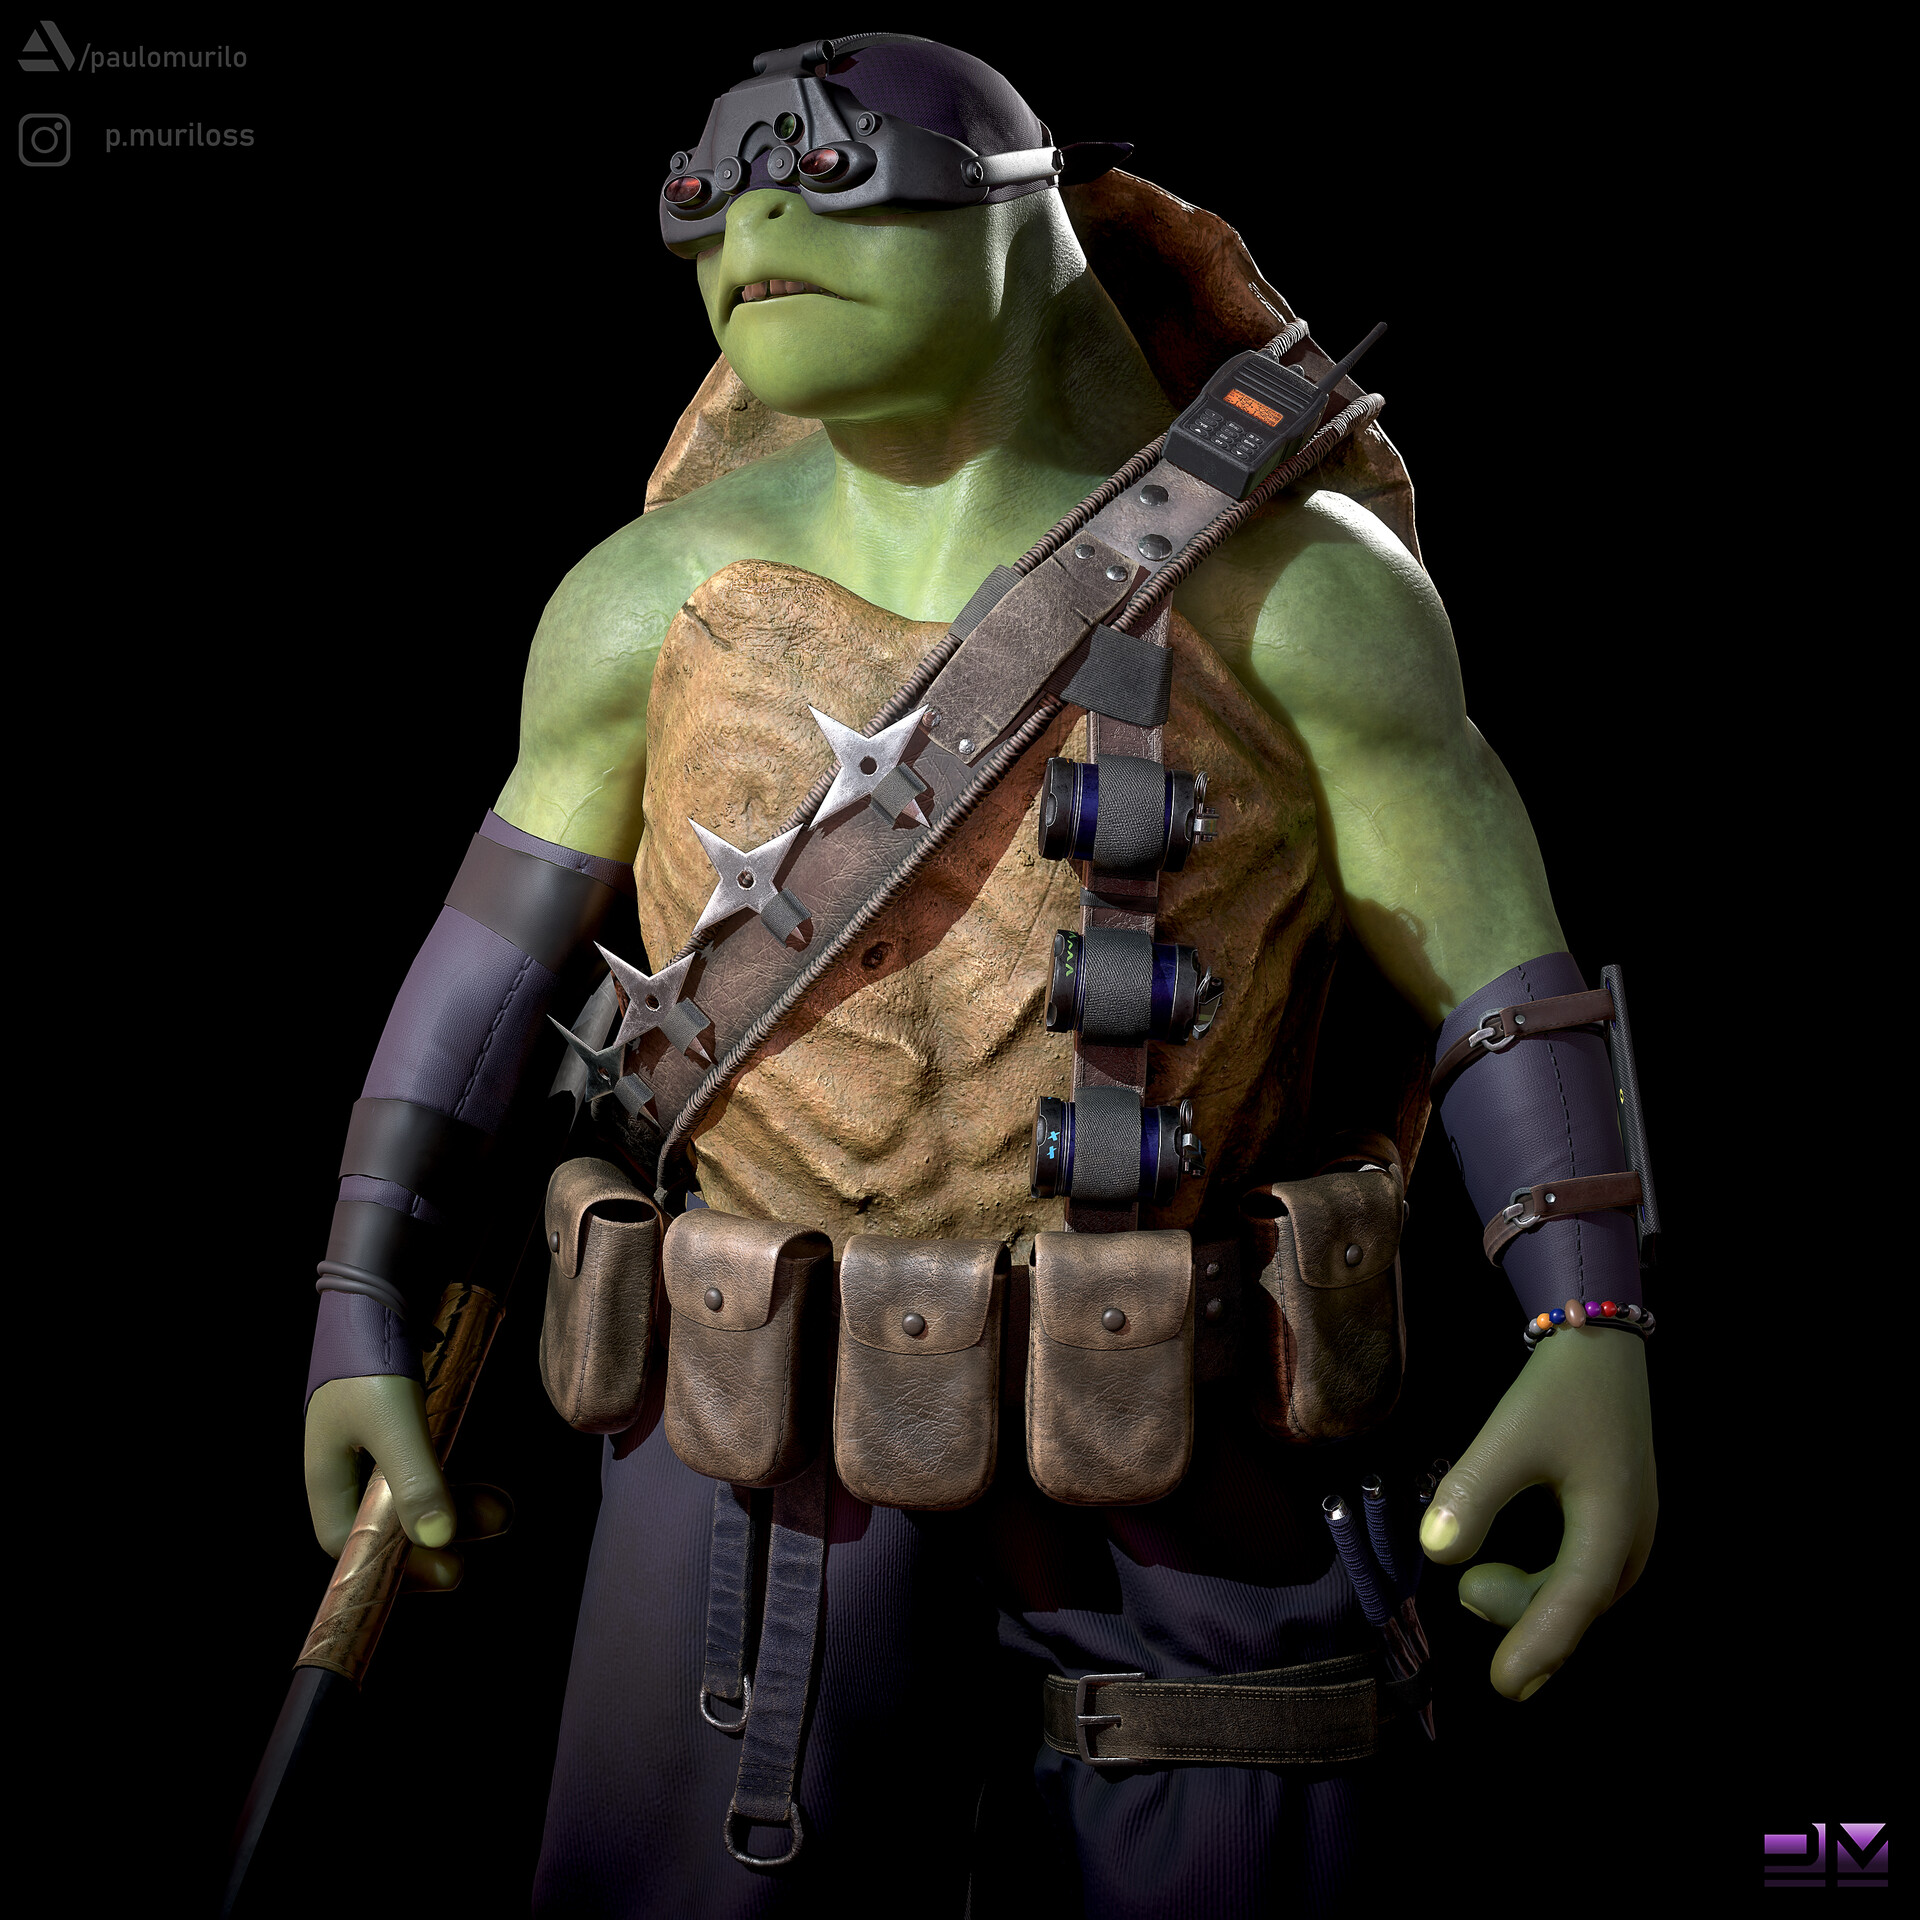 ArtStation - Donatello from Teenage Mutant Ninja Turtles